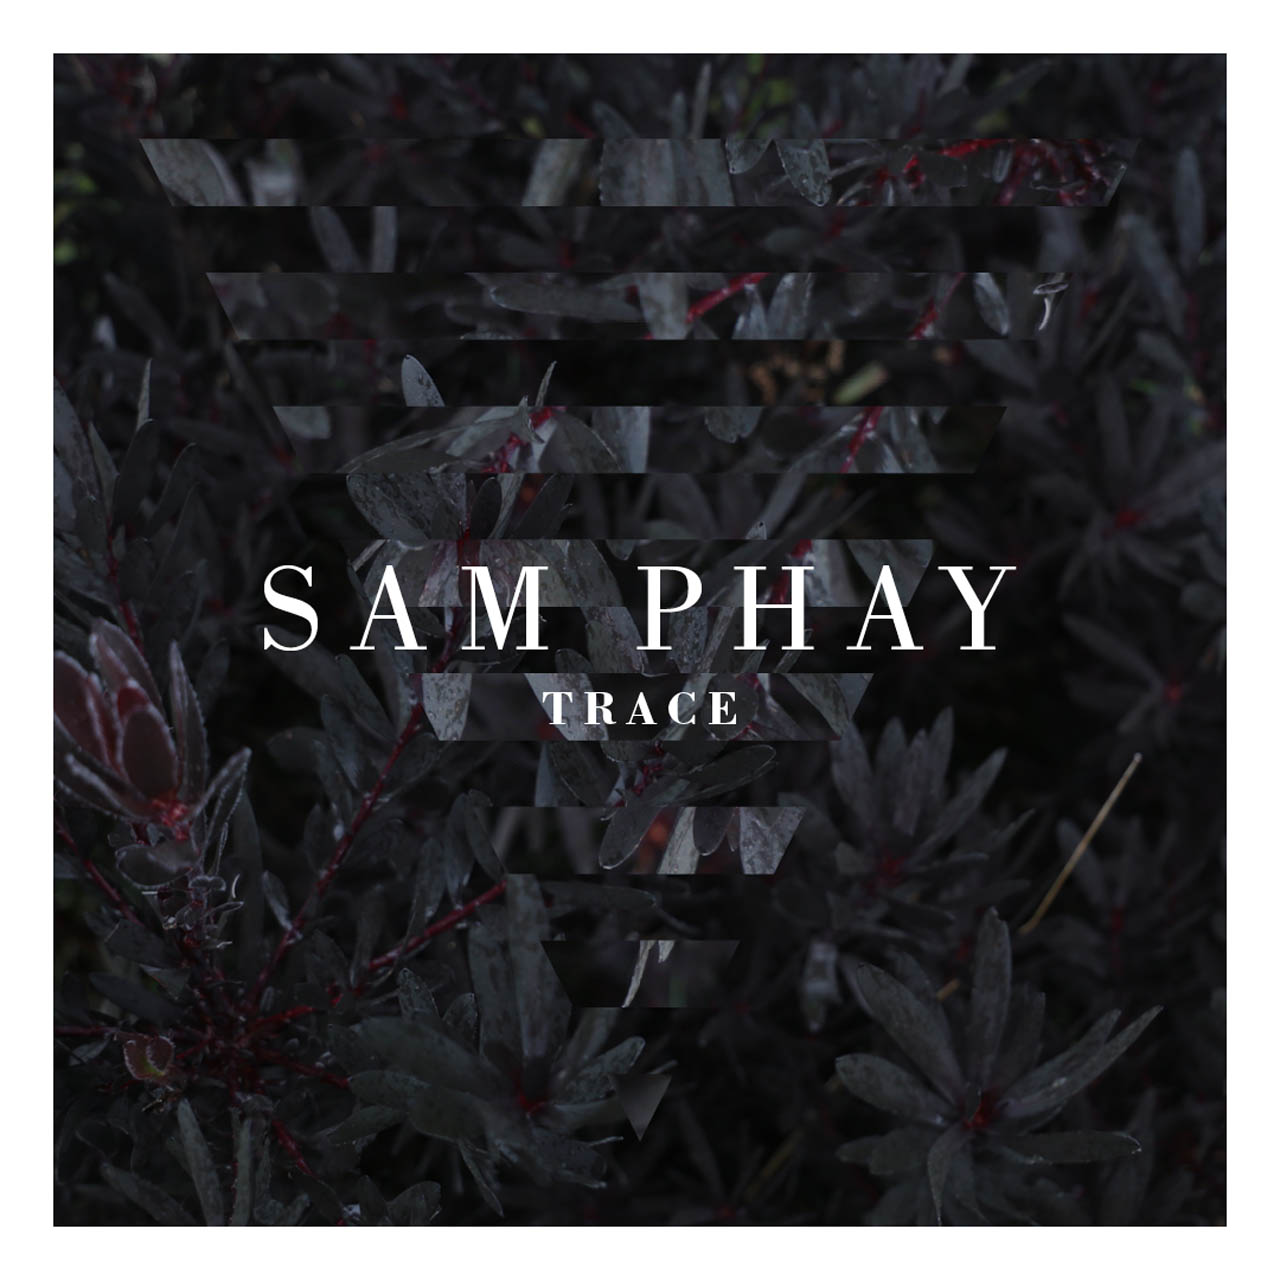 Sam Phay Trace